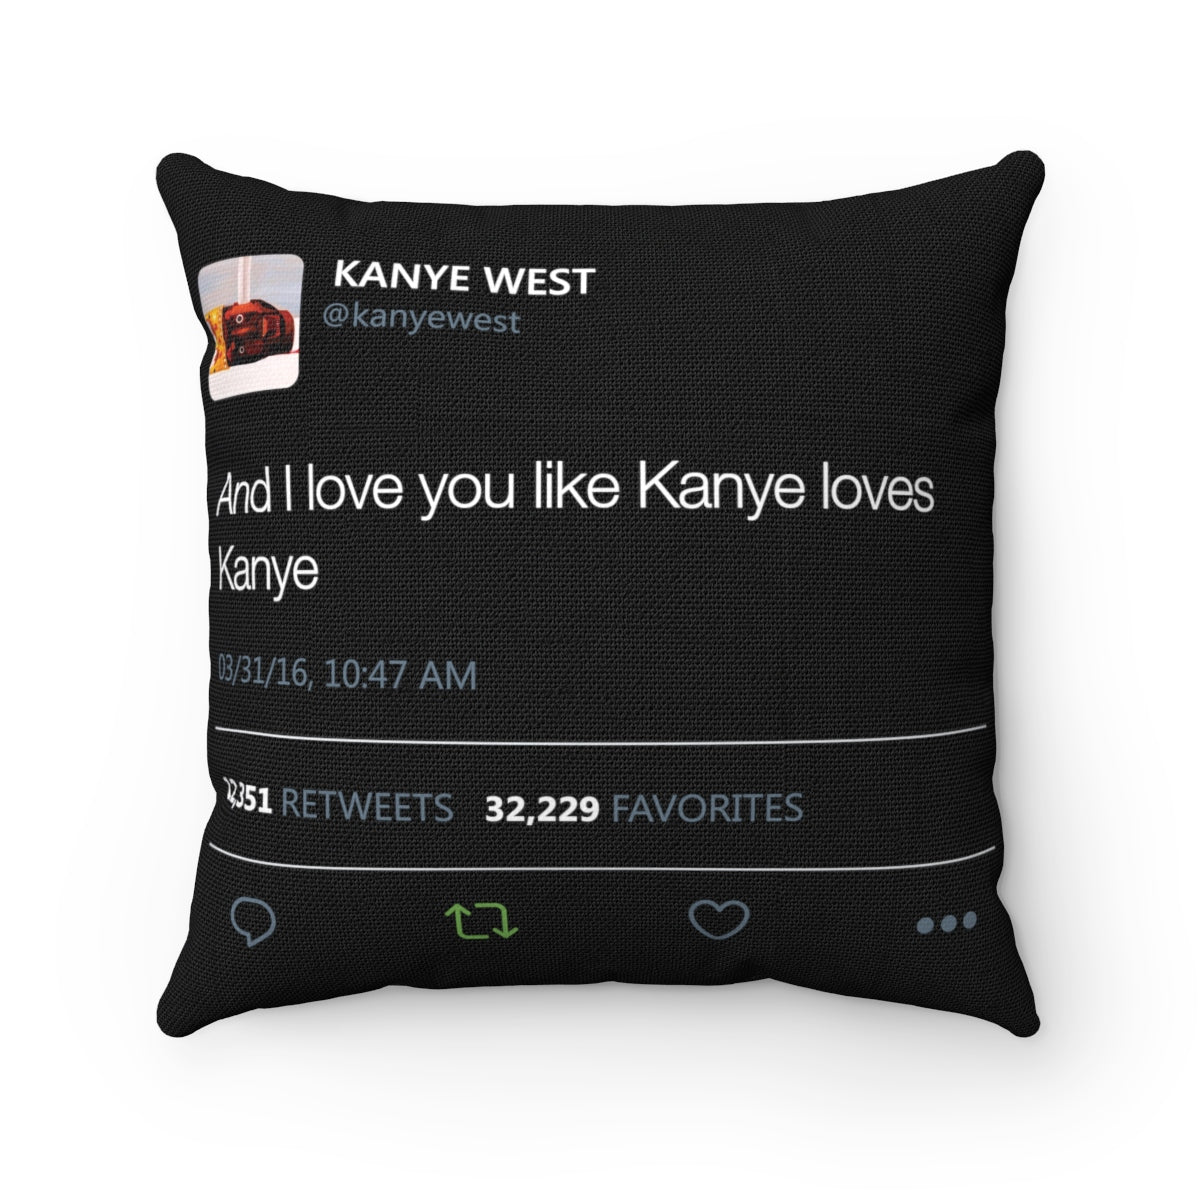 And I love you like Kanye loves Kanye - Yeezy Tweet Spun Cushion Pillow-14" x 14"-Archethype